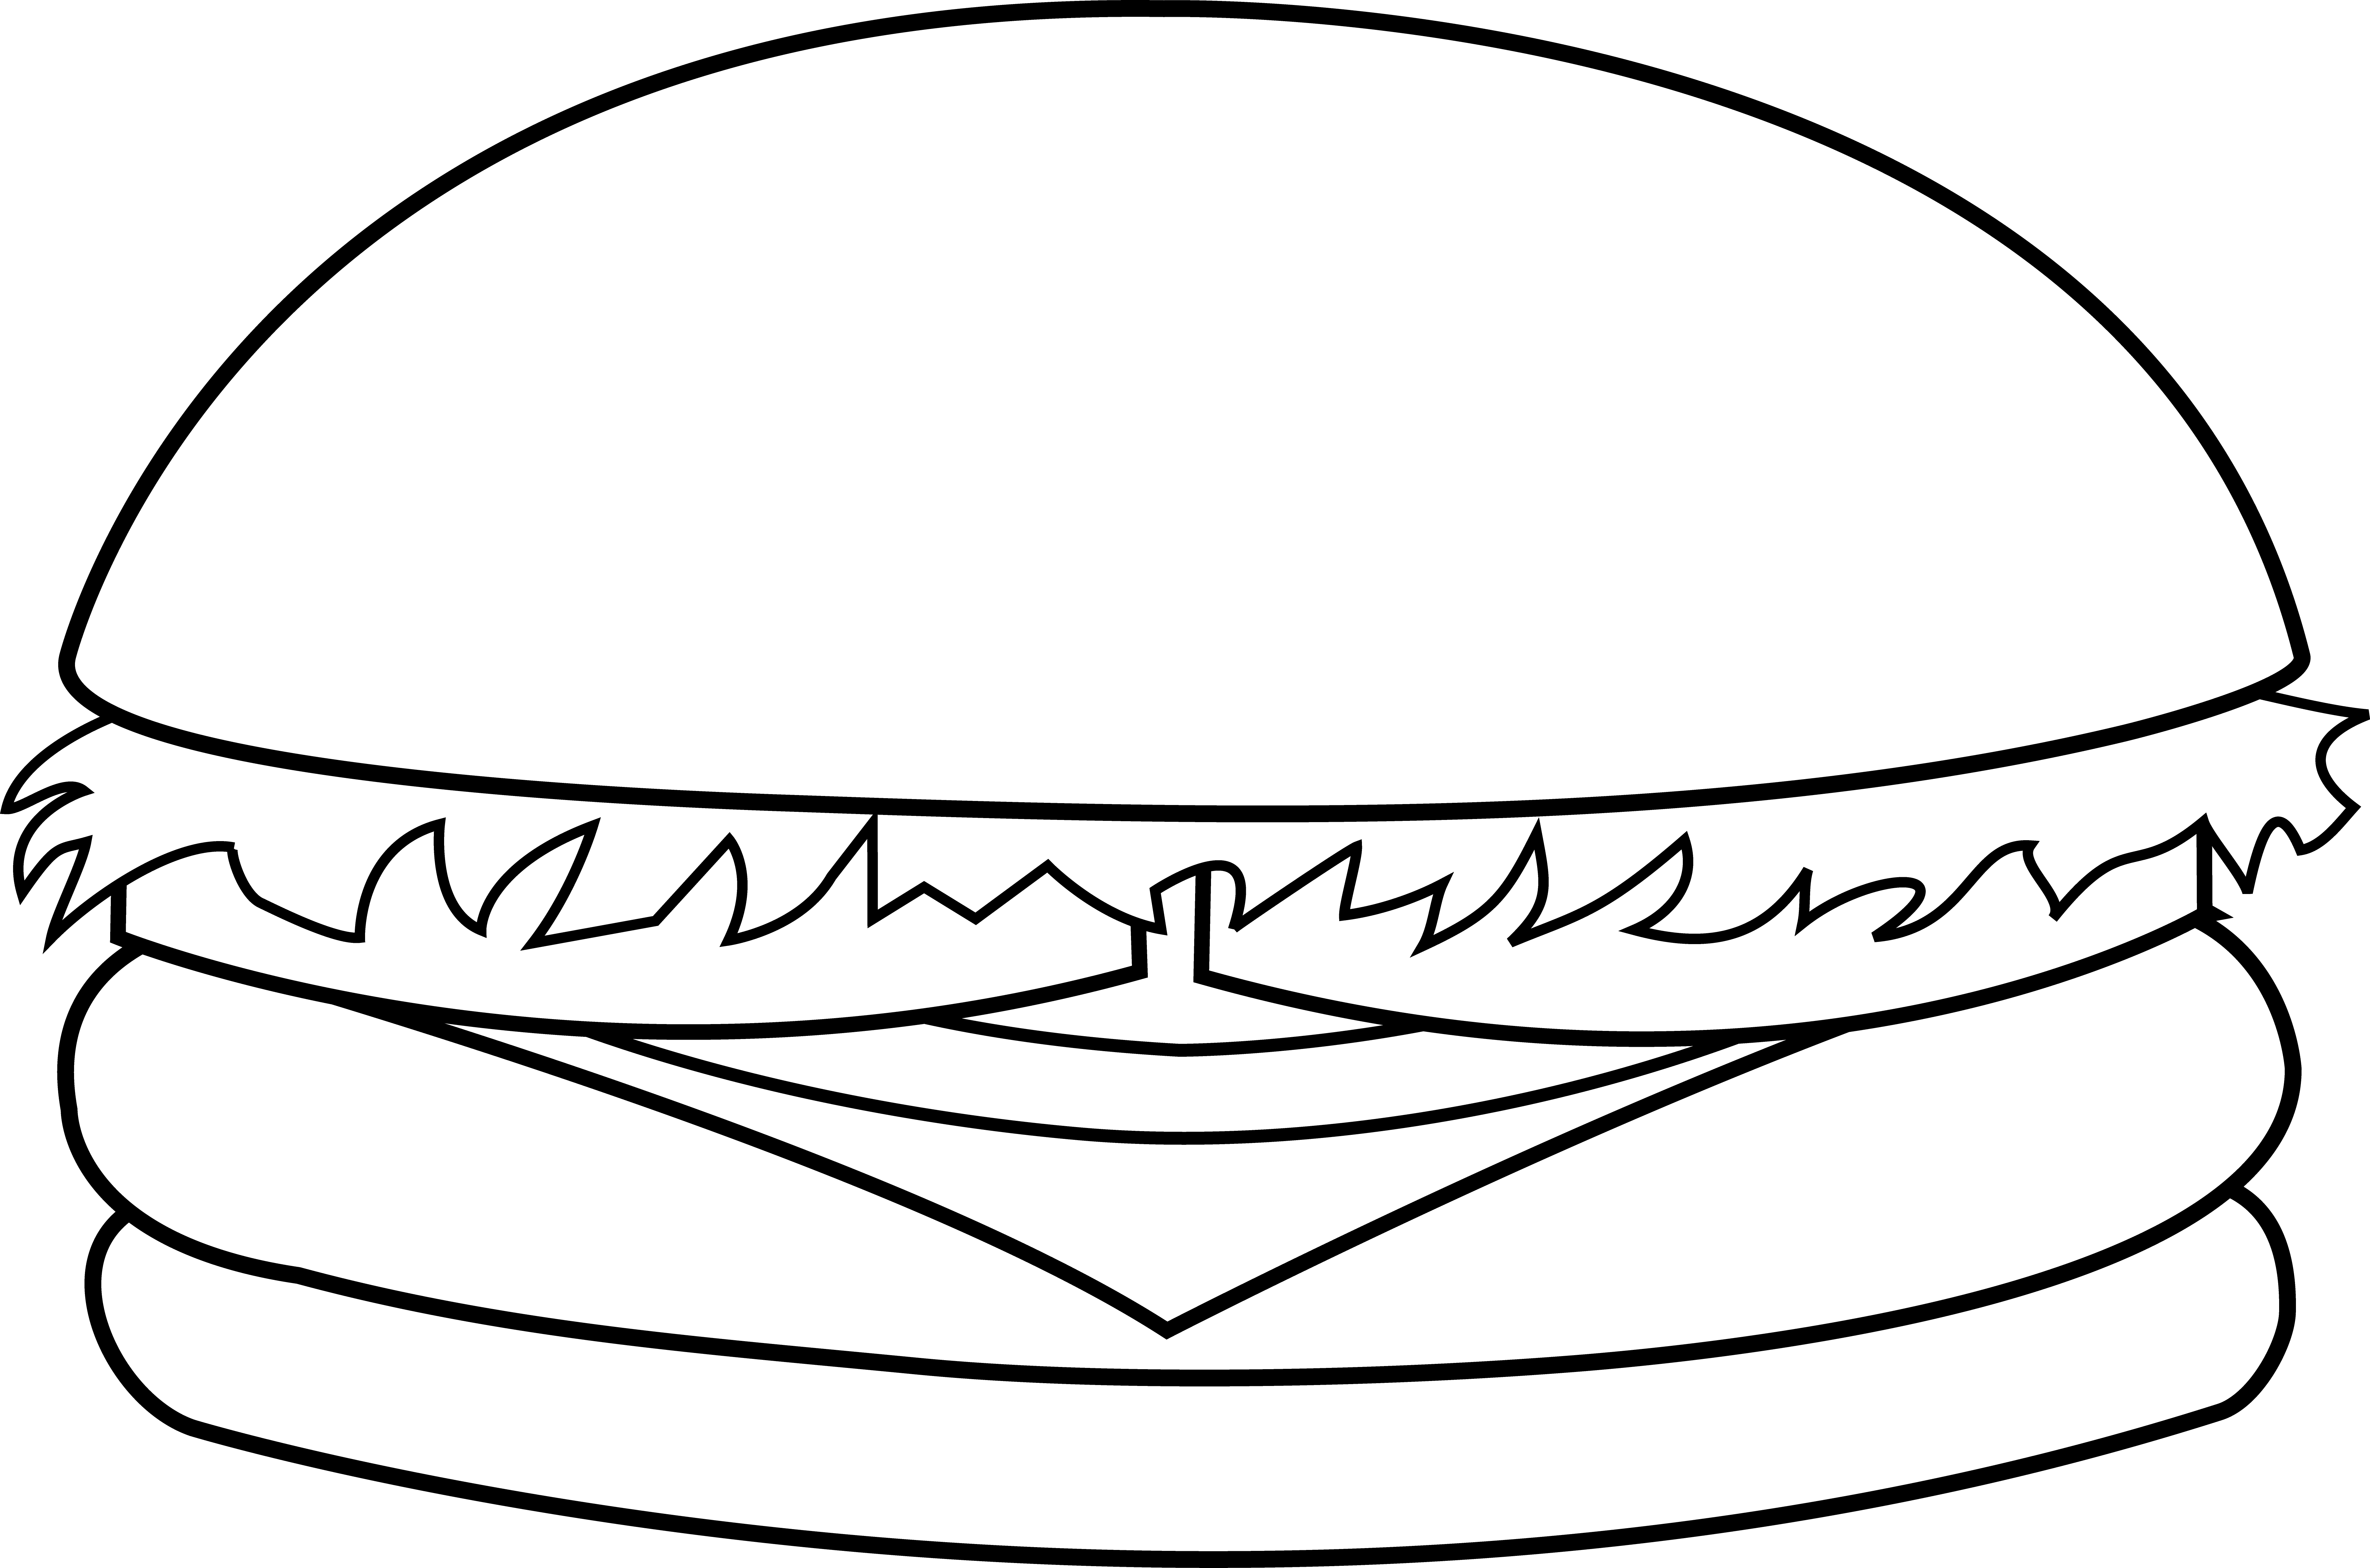 Ham clipart protein. Hamburger cartoon burger image